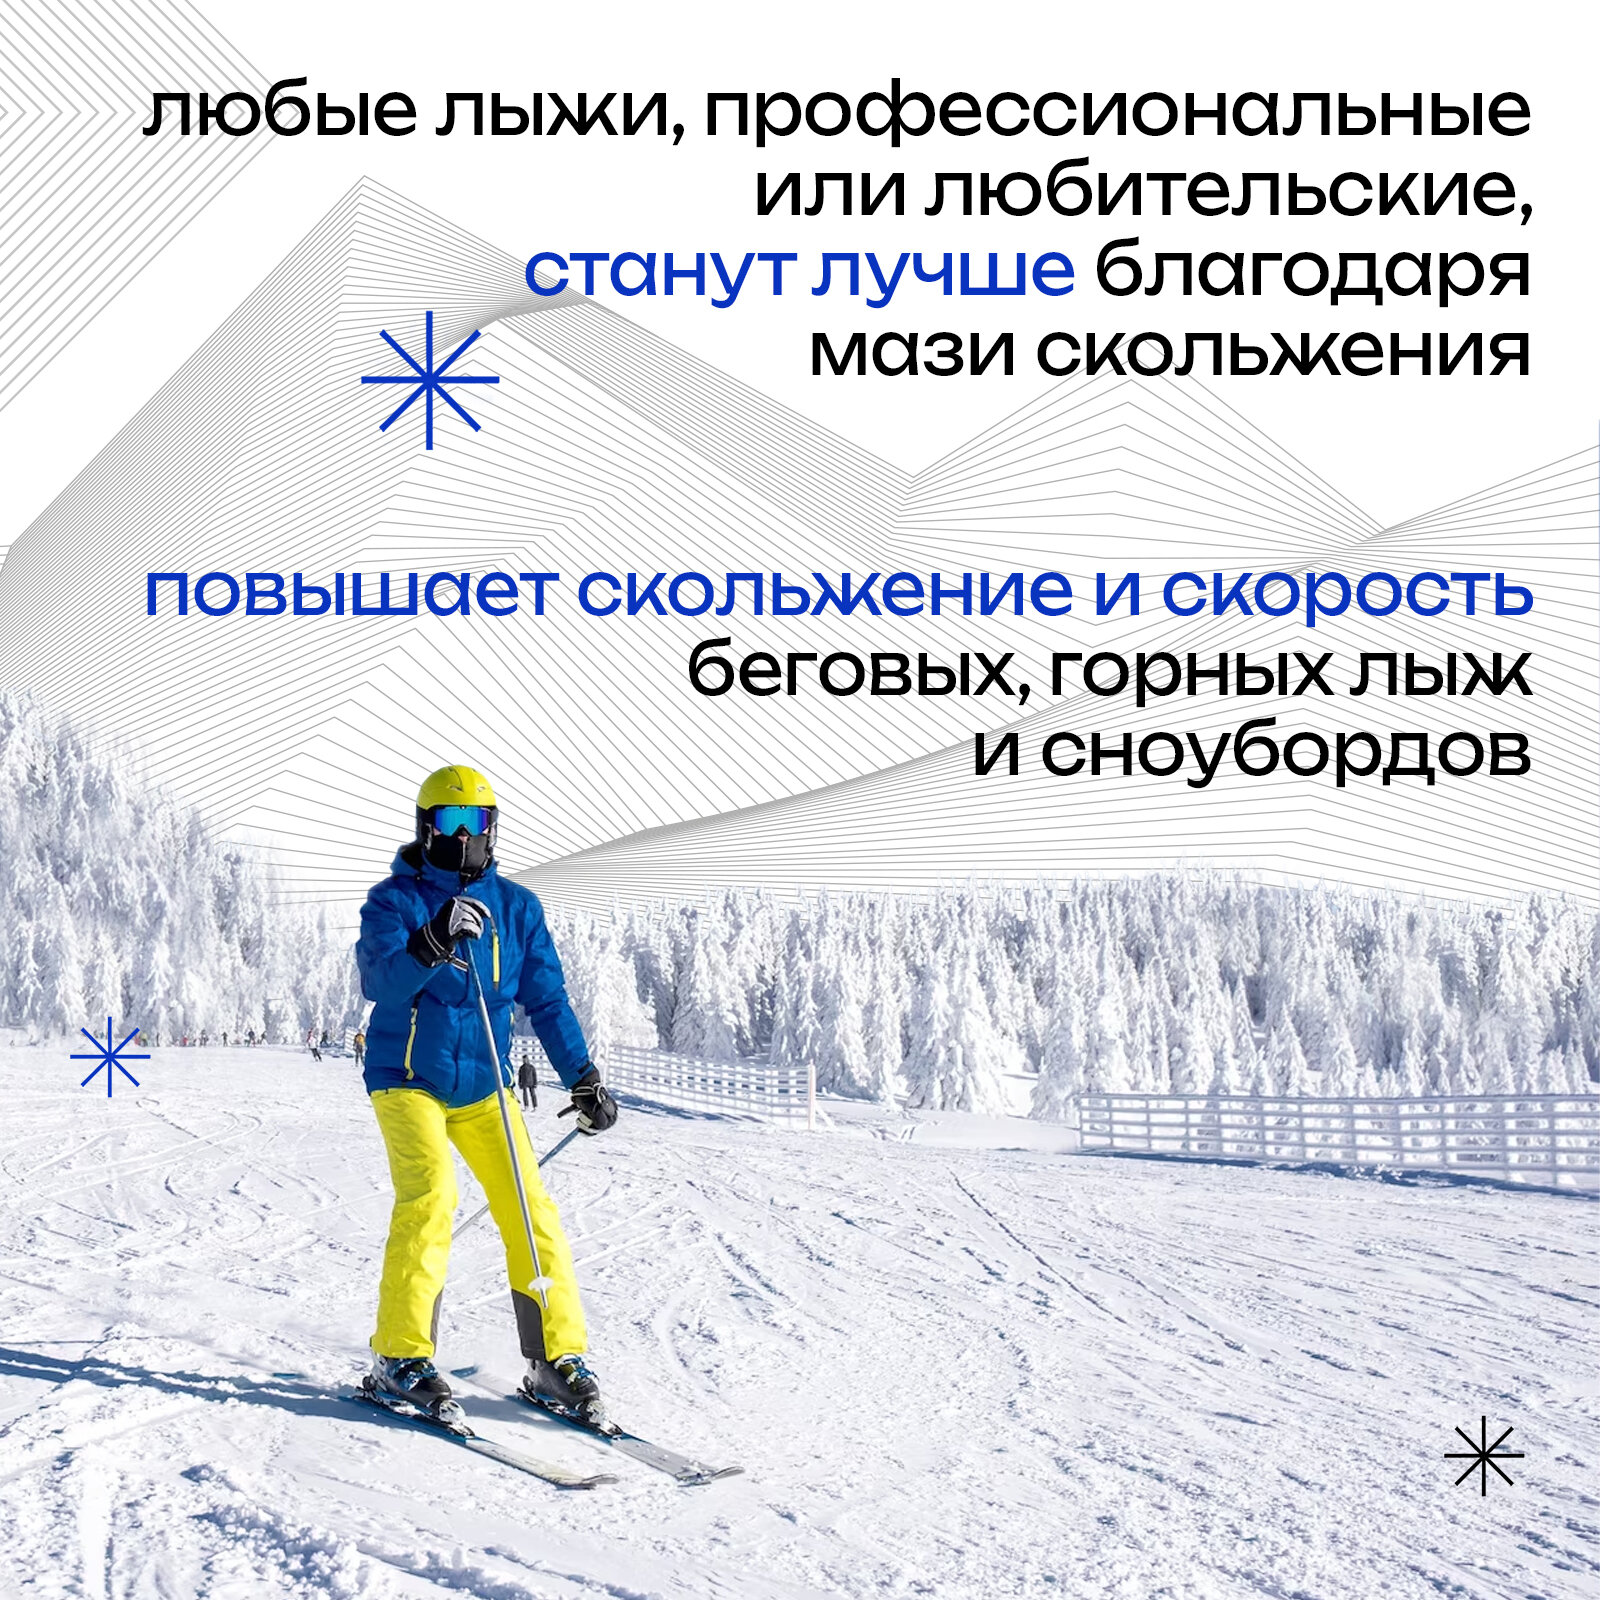 Мазь лыжная Sprint, температурный режим от -6 до -12°C, вес 40 г, цвет зеленый